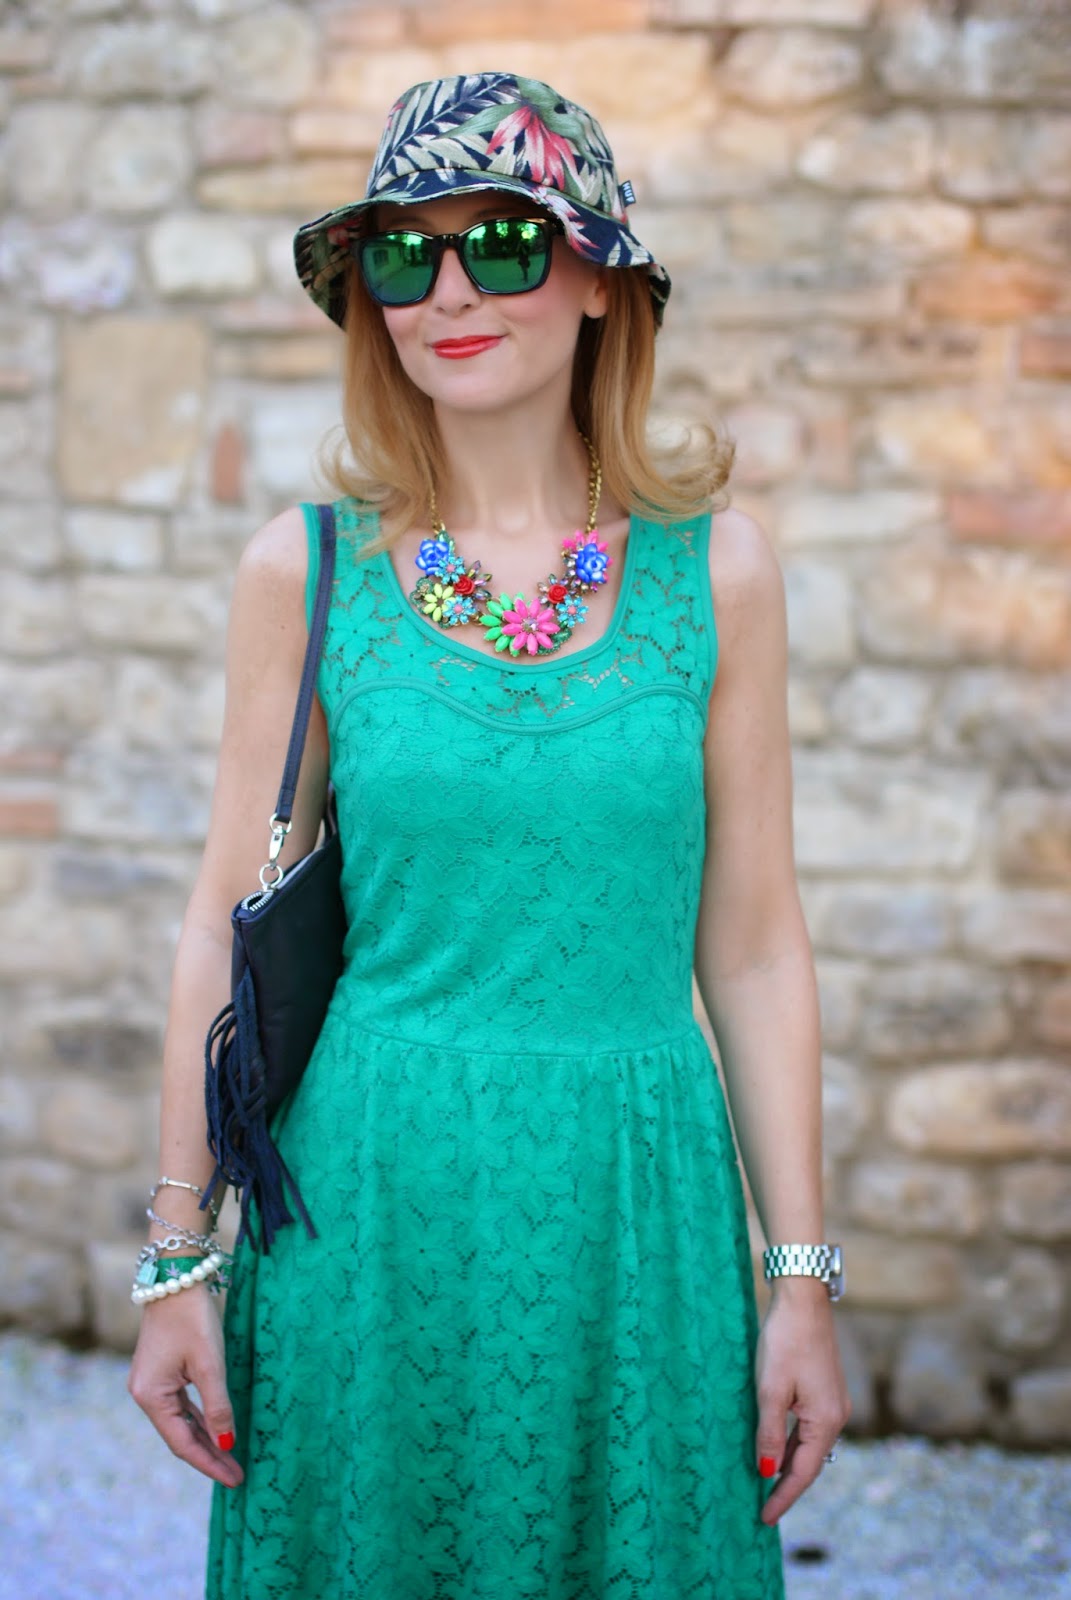 Morgan de toi lace dress, fringed bag, tropical bob hat, oakley green sunglasses, Fashion and Cookies, fashion blogger